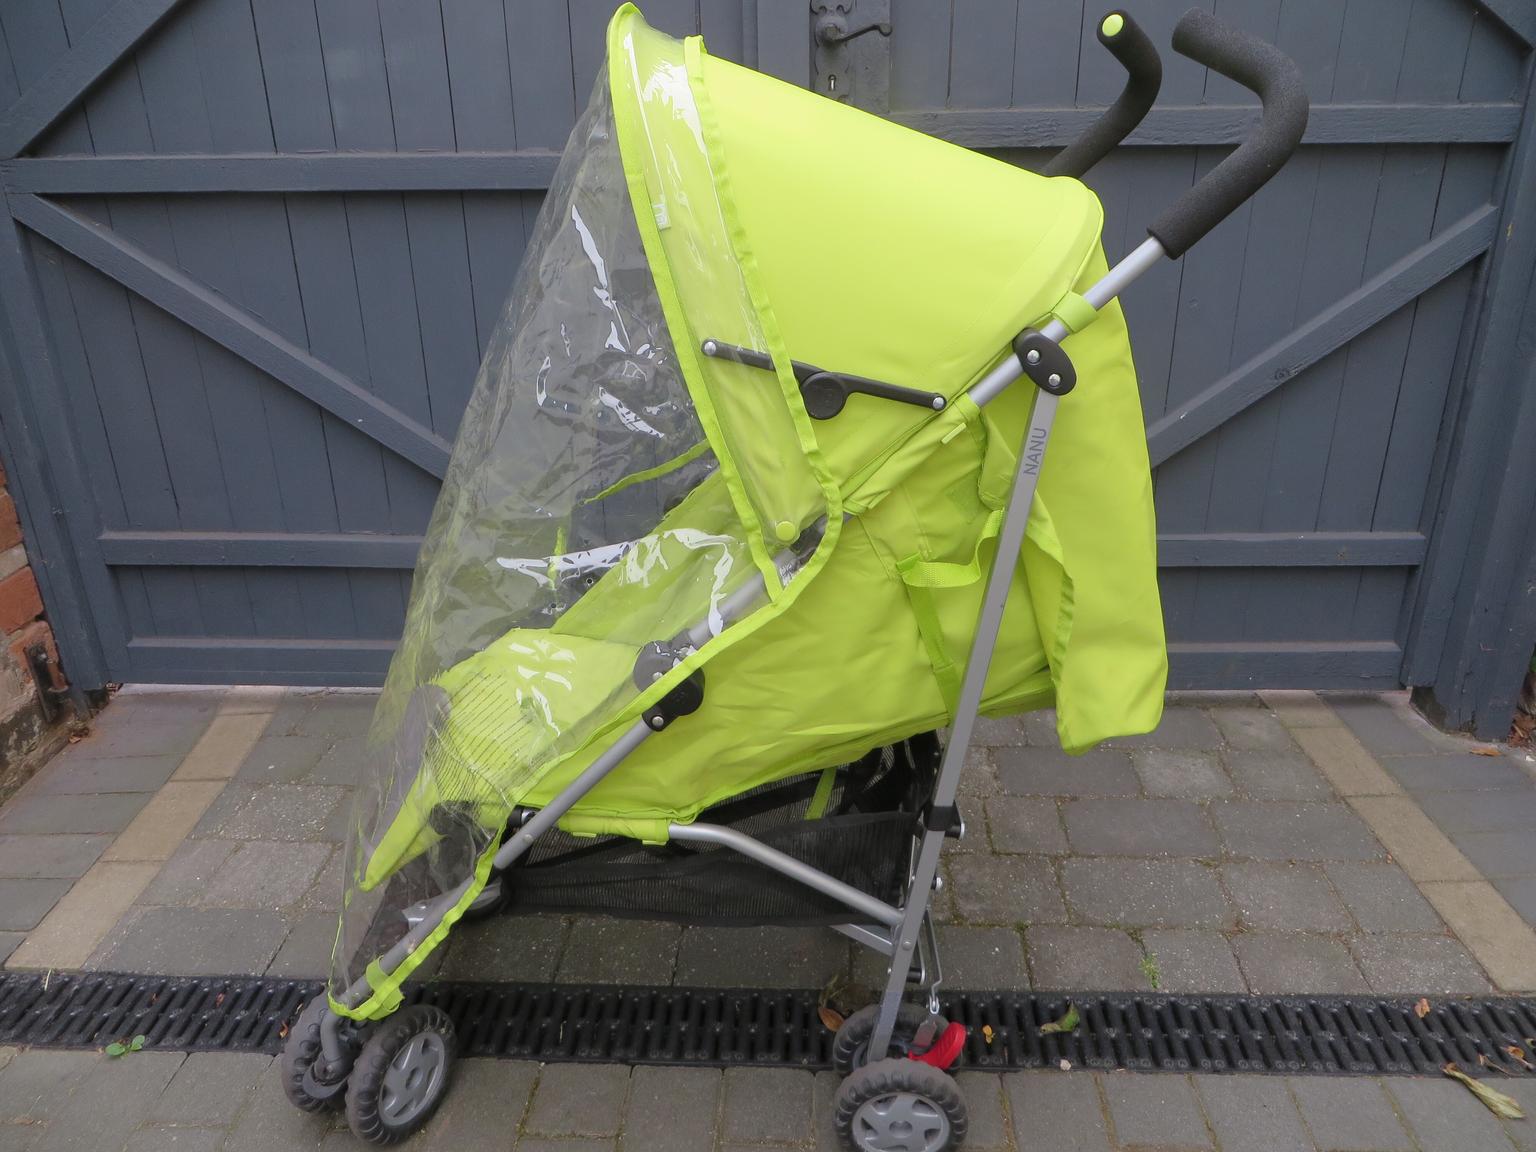 mothercare green stroller